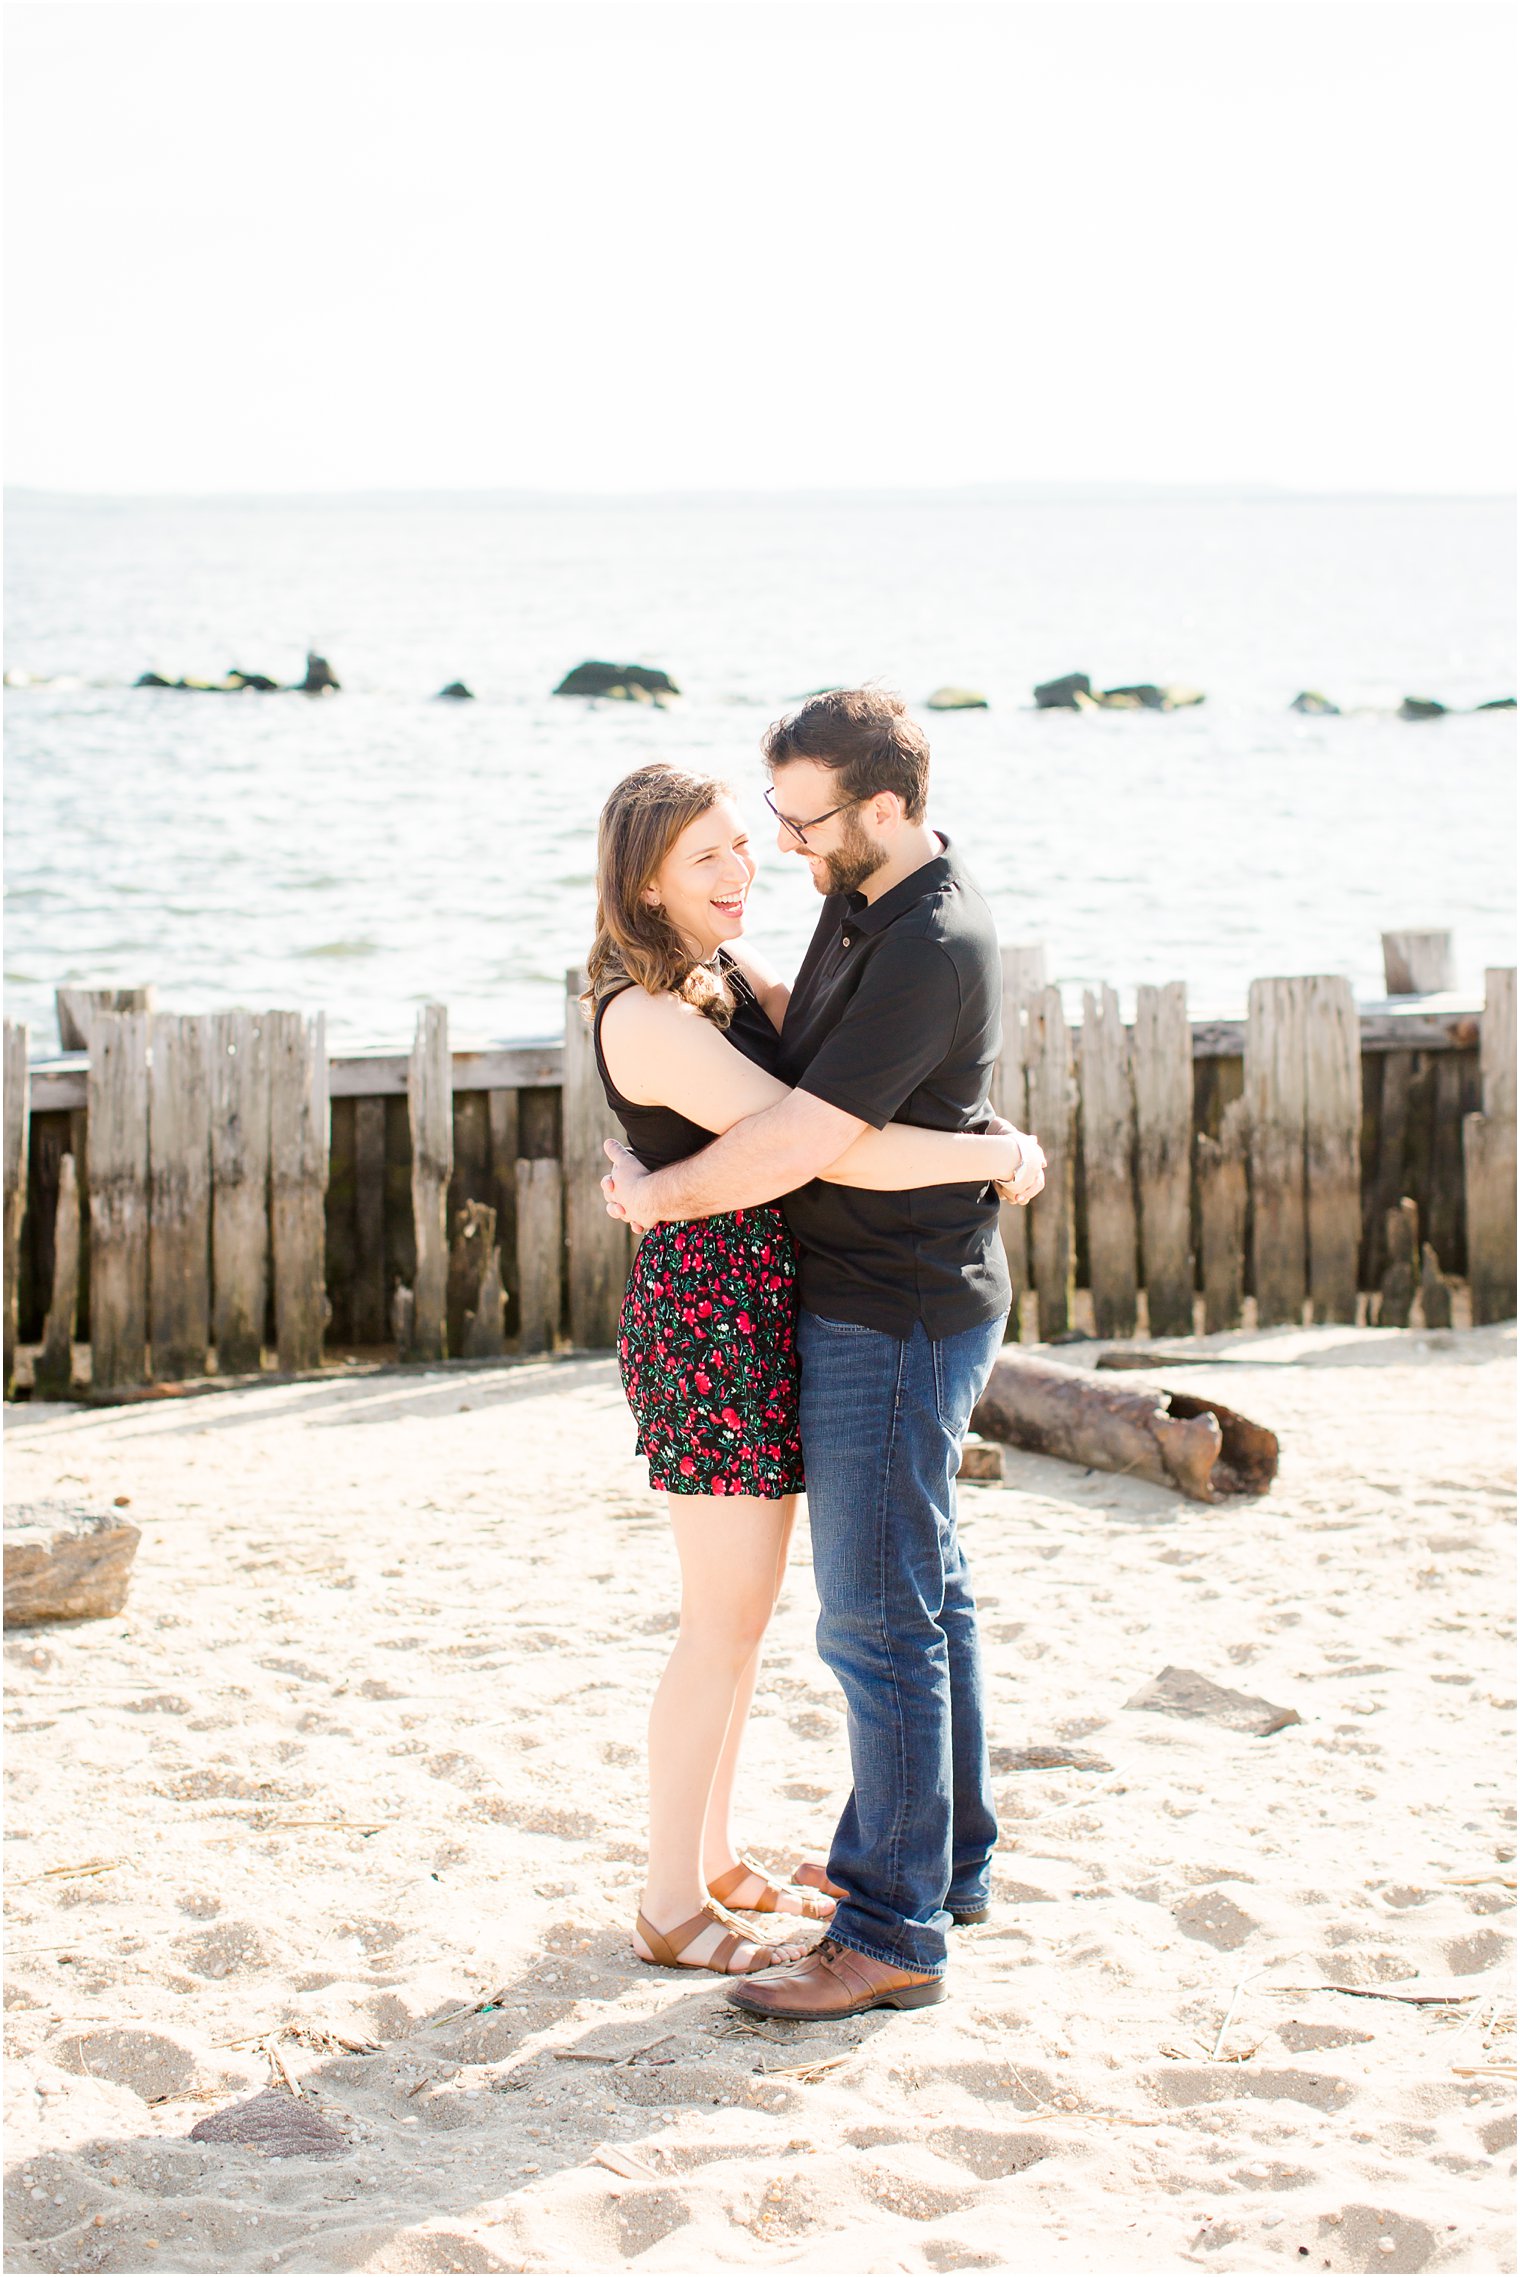 Fun documentary photos of engaged couple